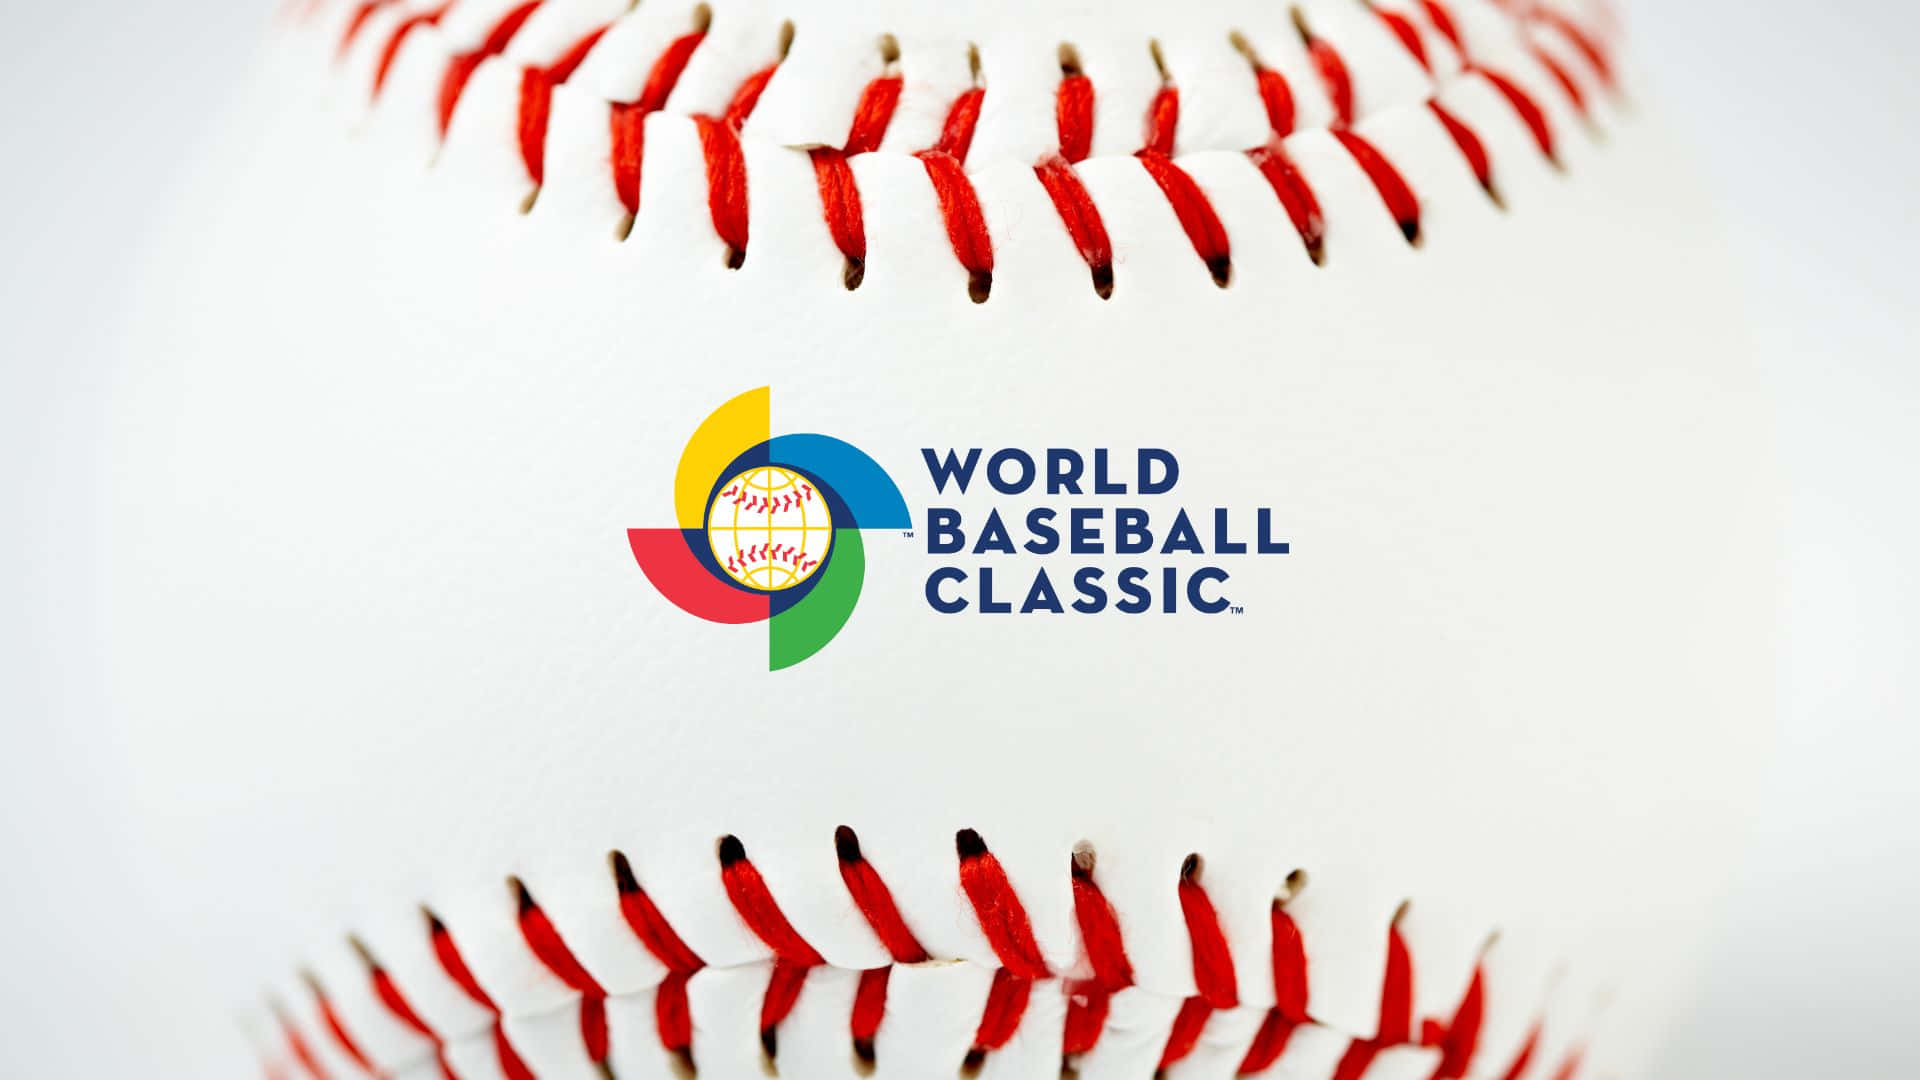 World Baseball Classic Wallpaper